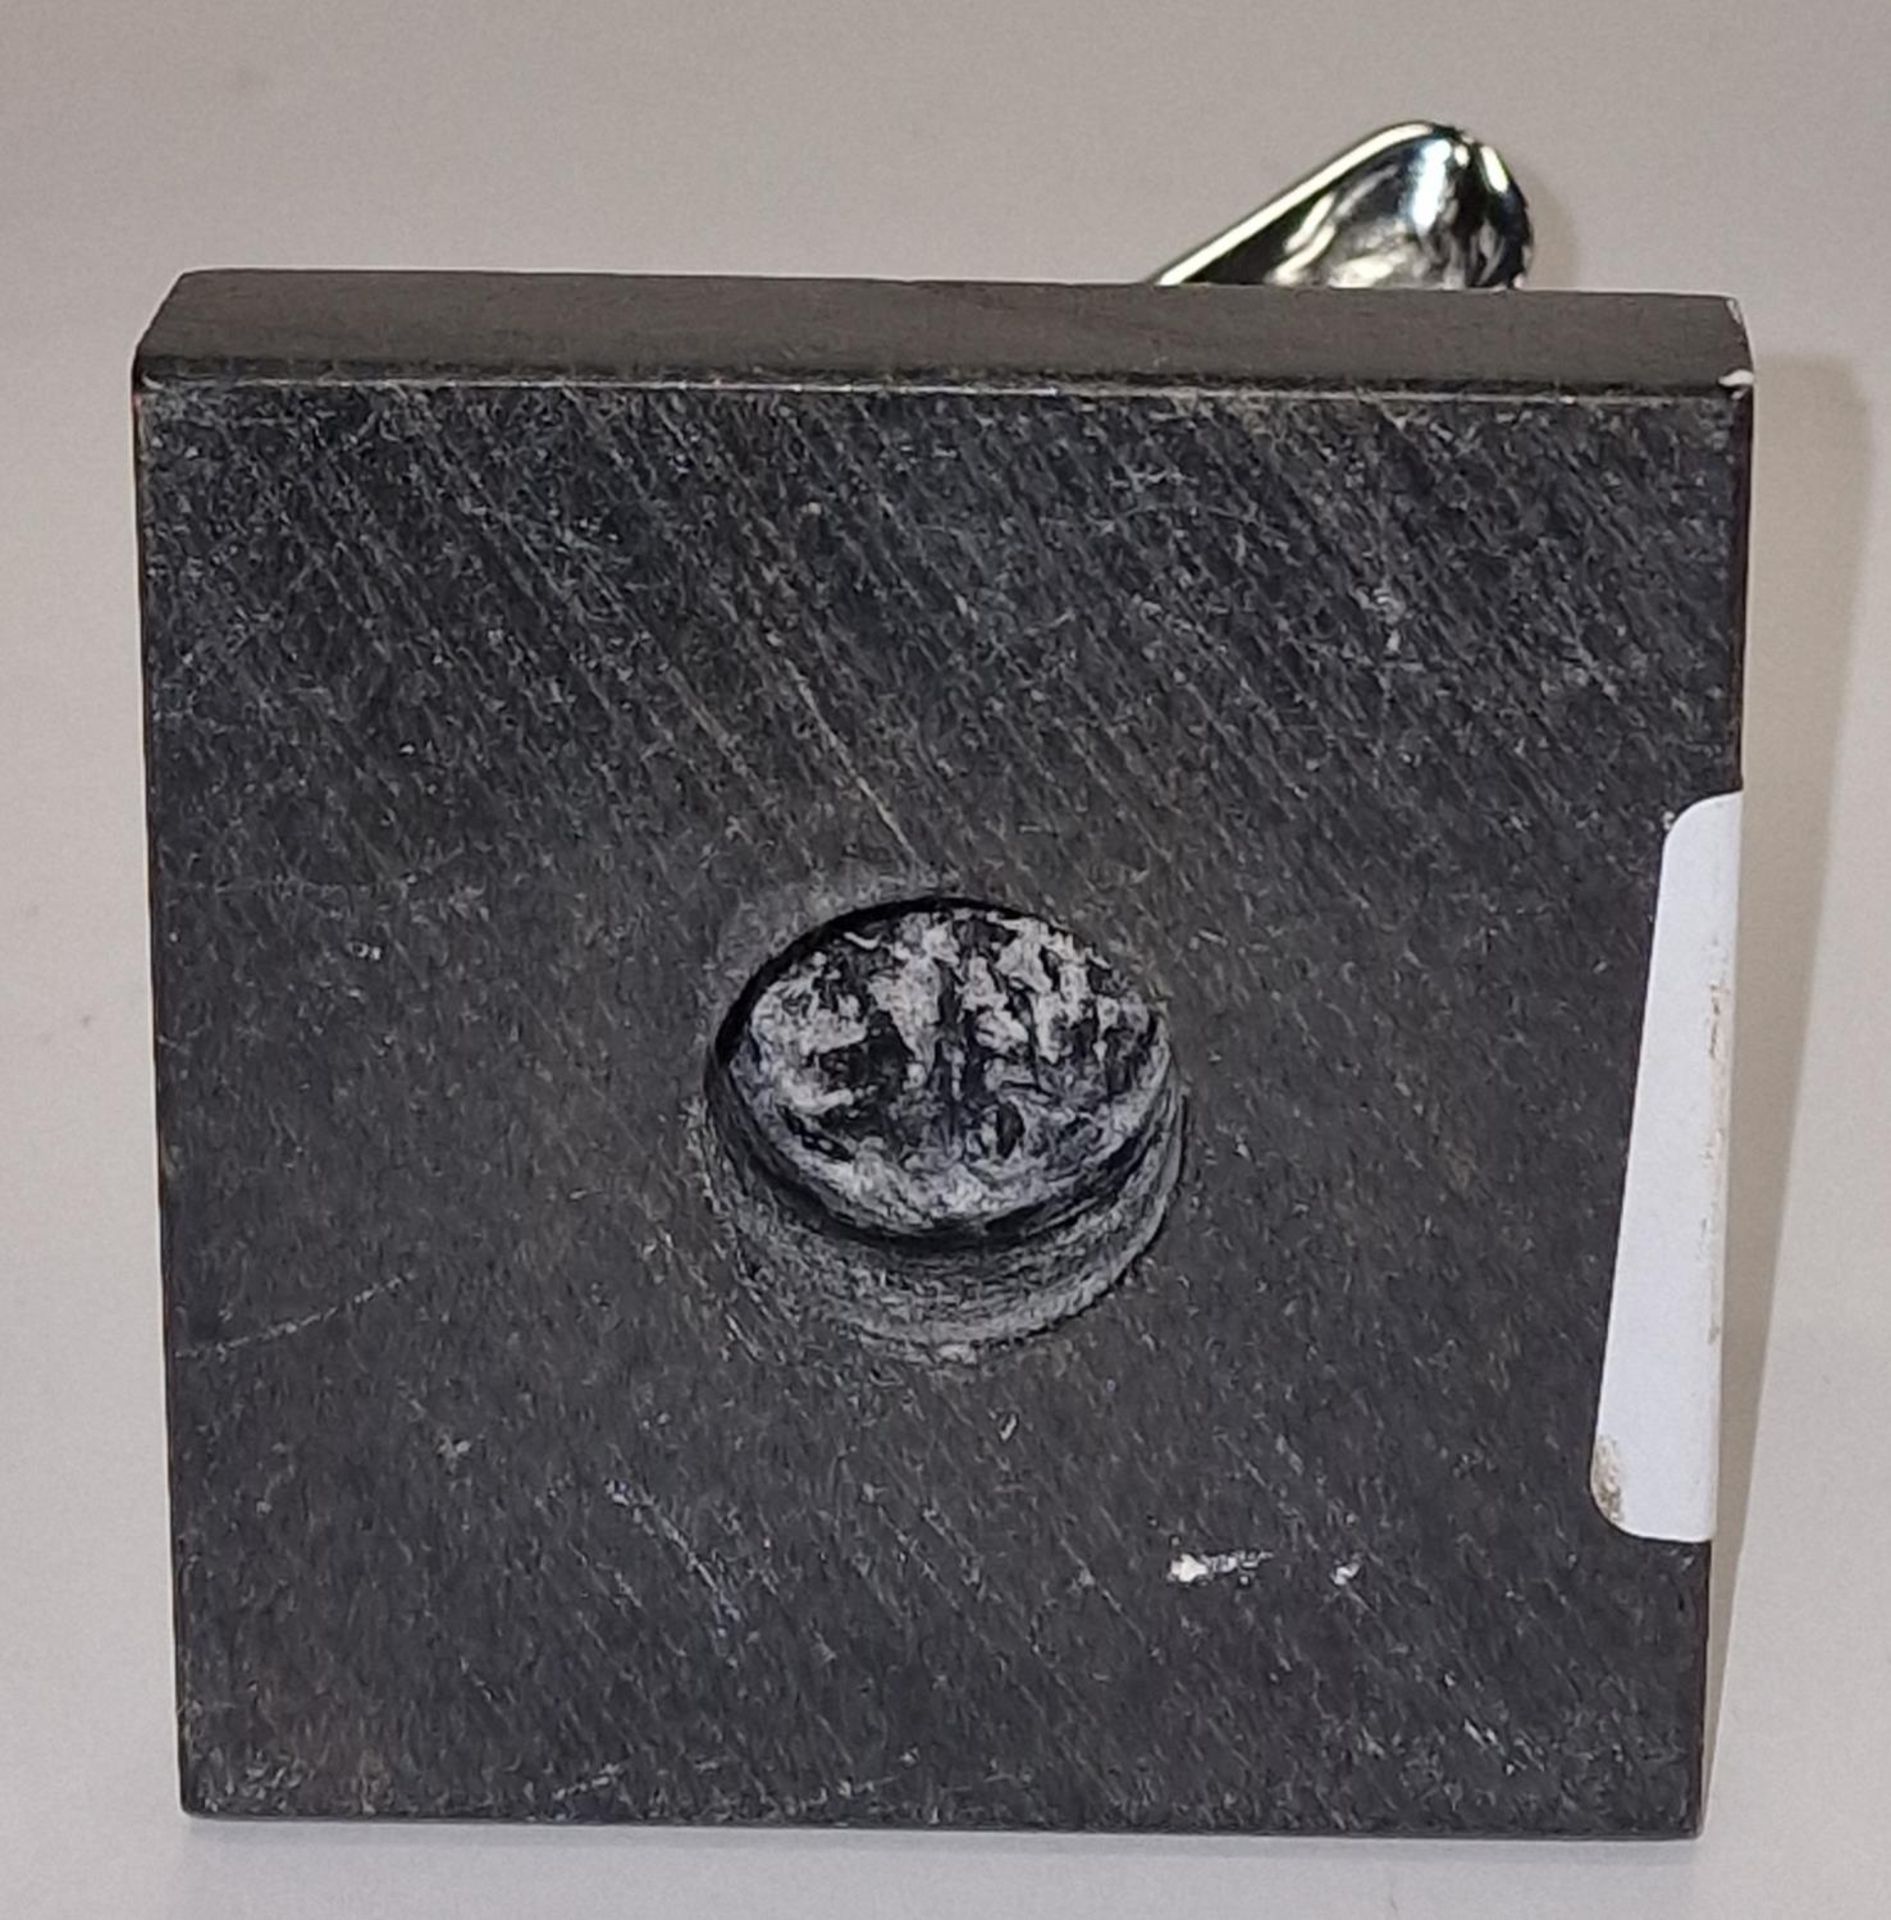 Miniature Rolls Royce Spirit of Ecstasy figure on stepped plinth. - Image 3 of 3